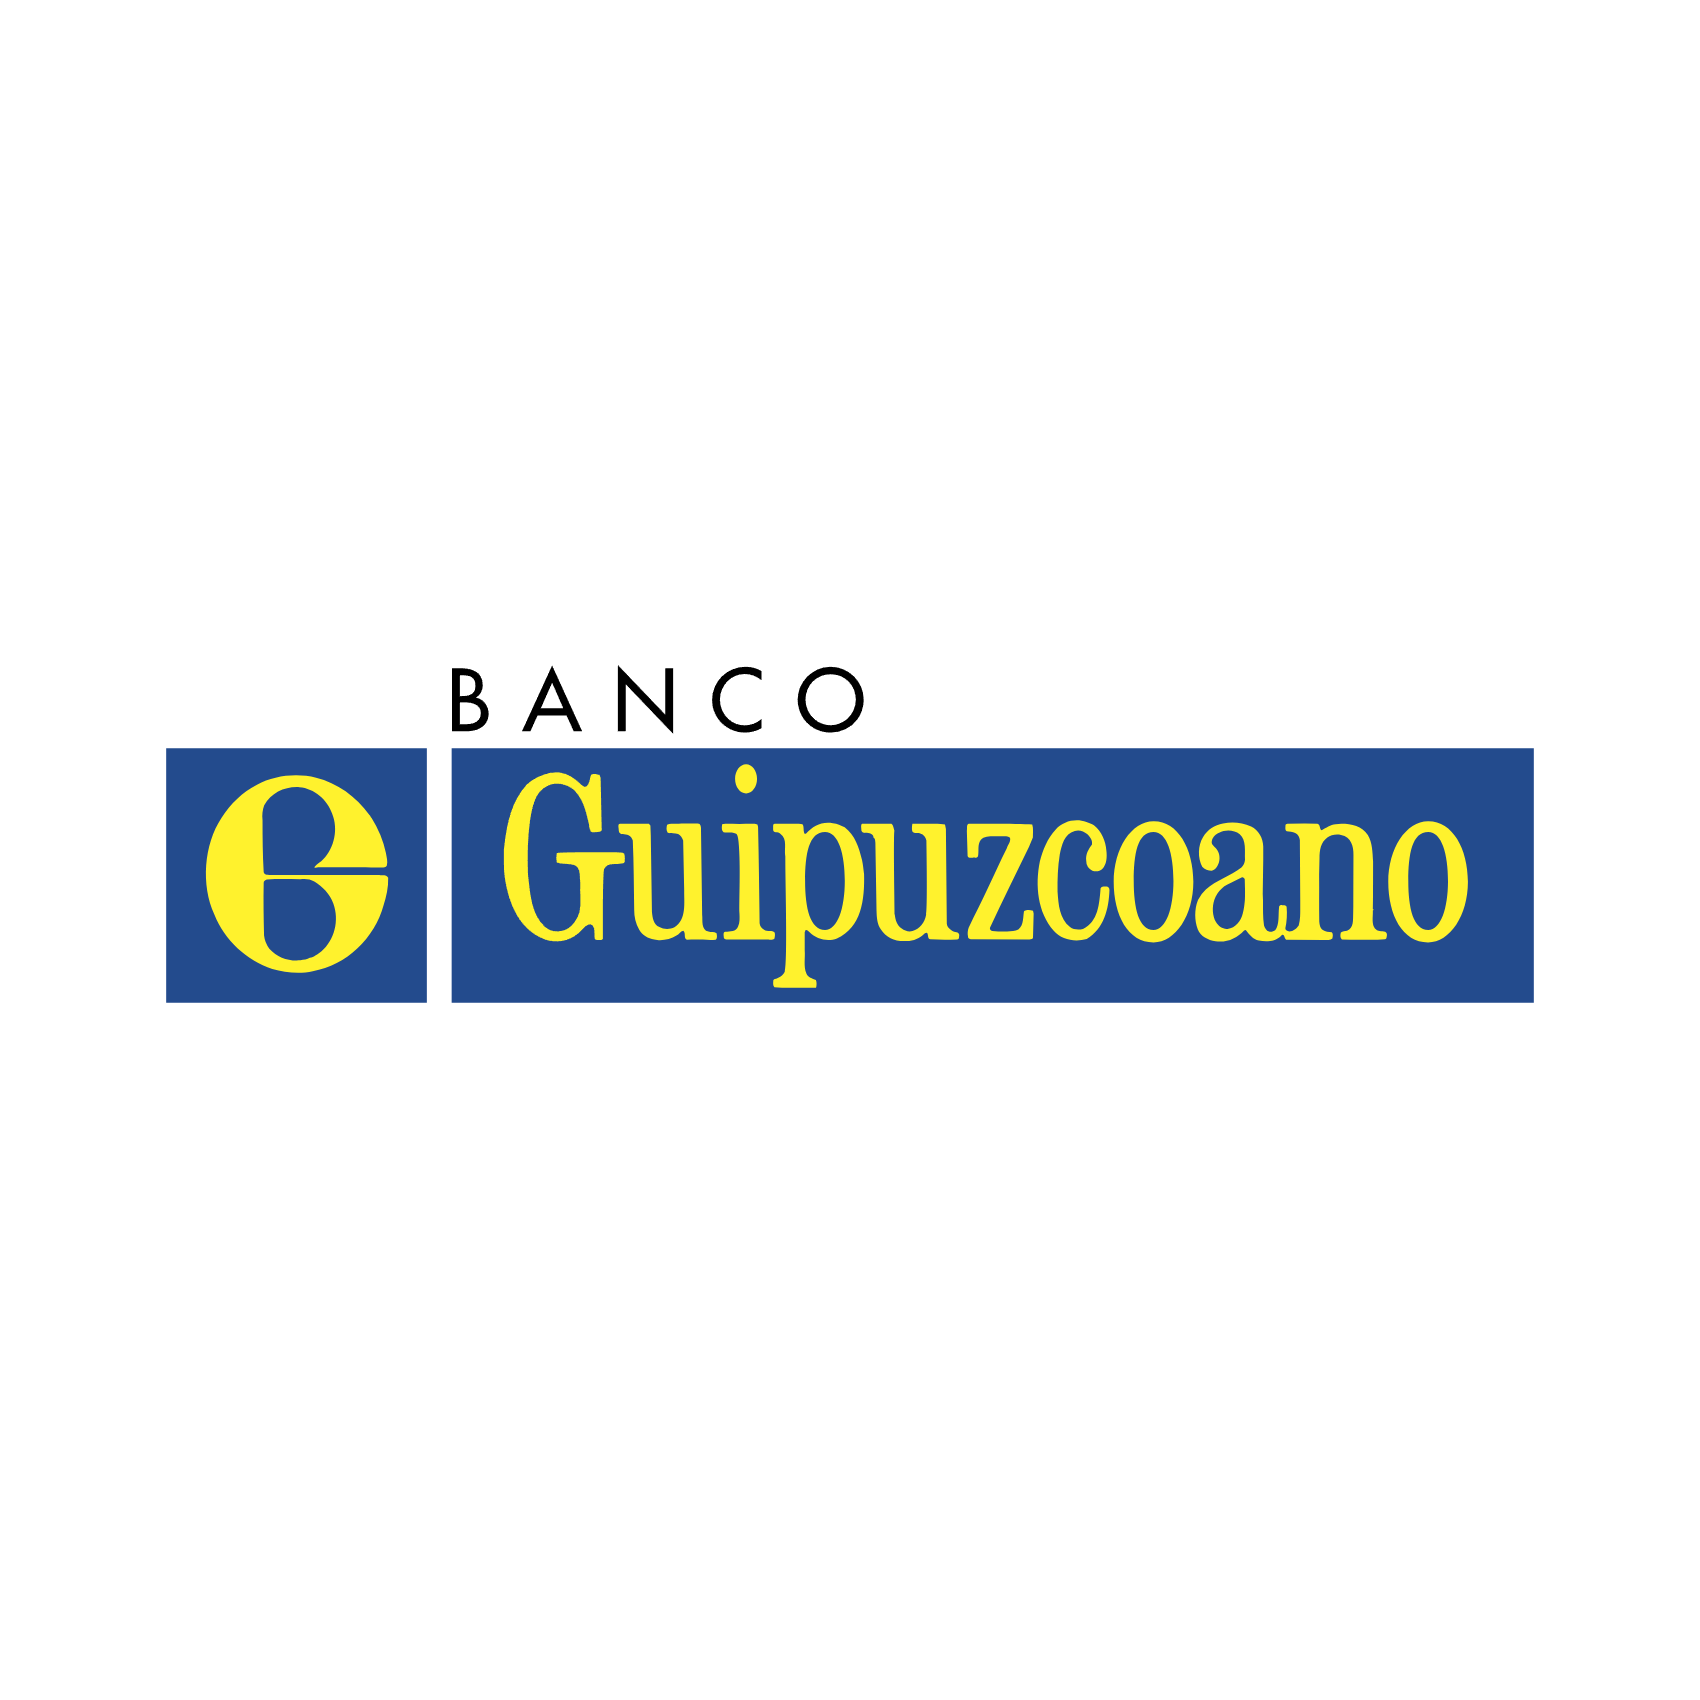 Banco Guipuzcoano